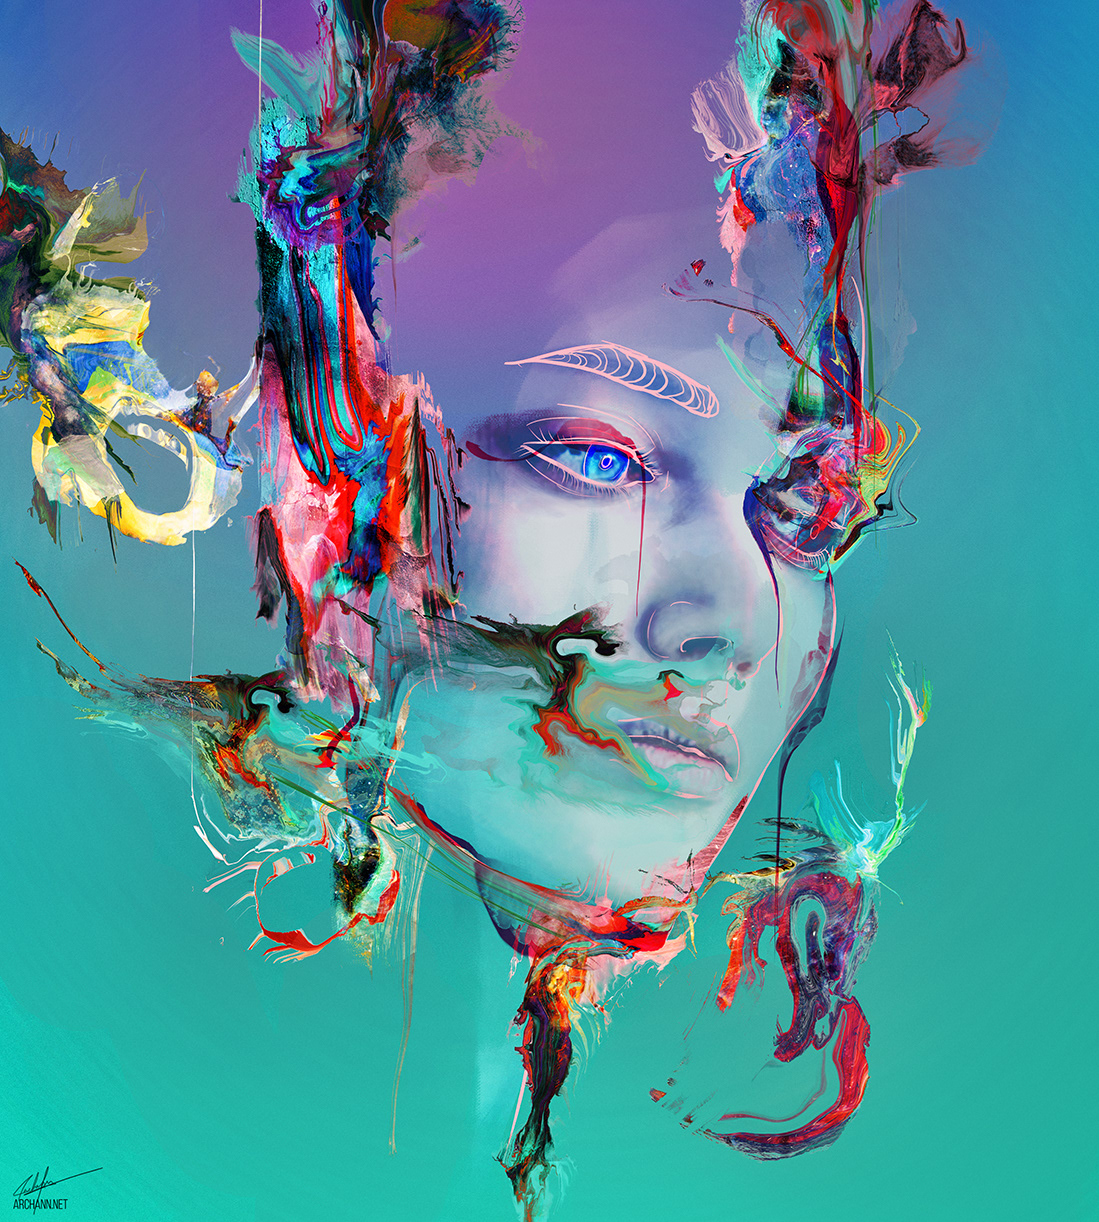 texture colorful vibrant campaign portrait face female feminine Global environment